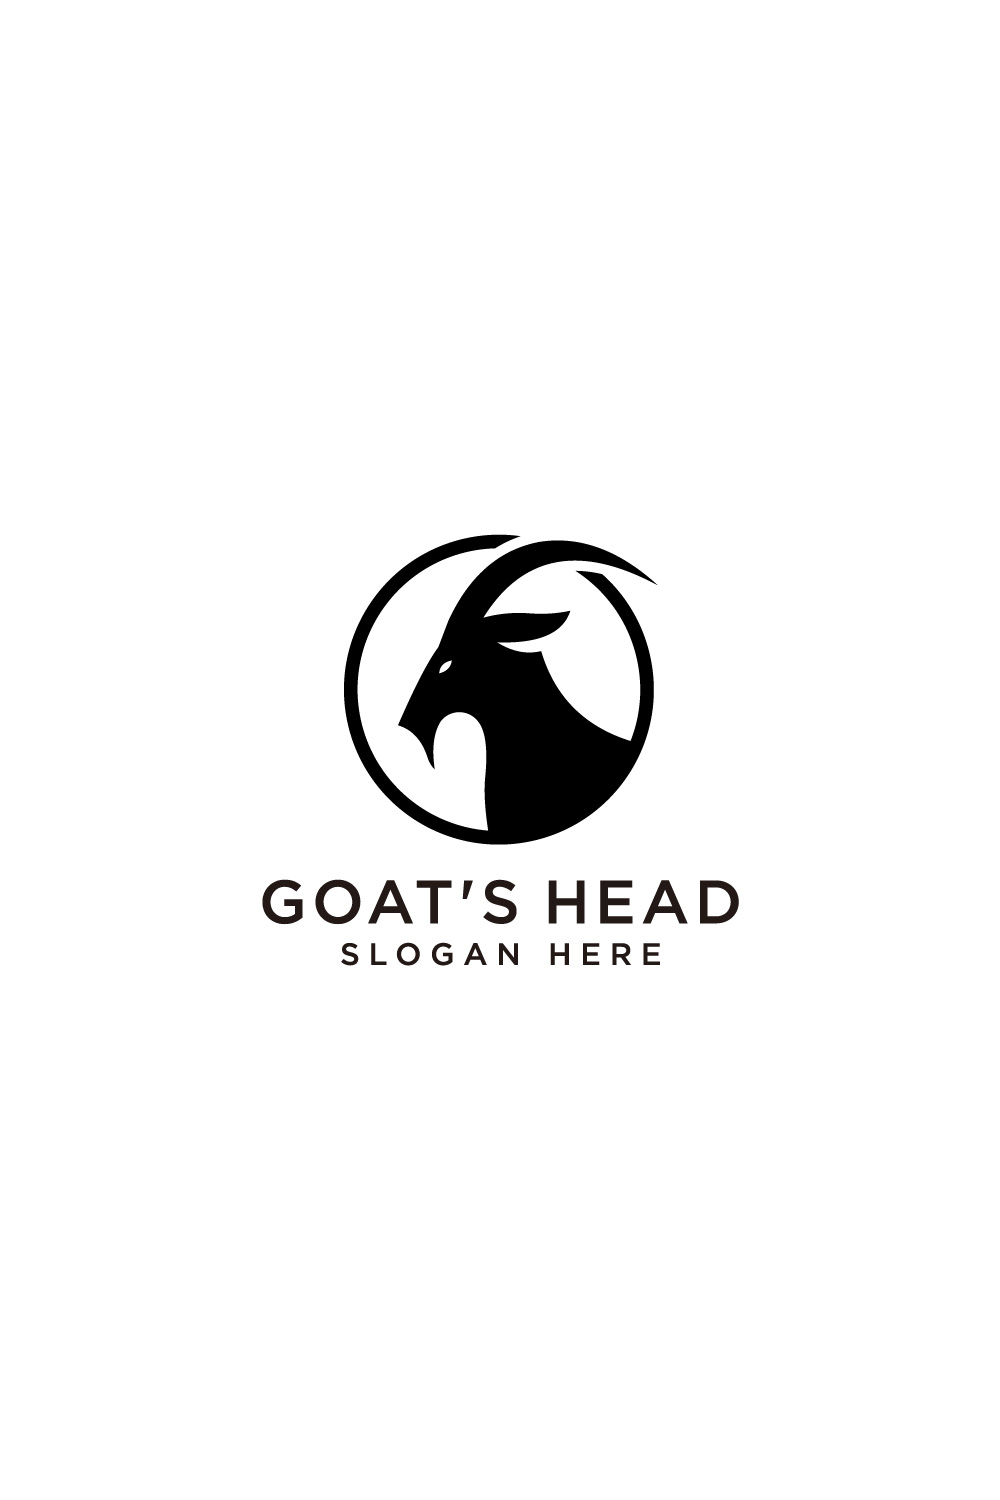 goat head logo vector design pinterest preview image.